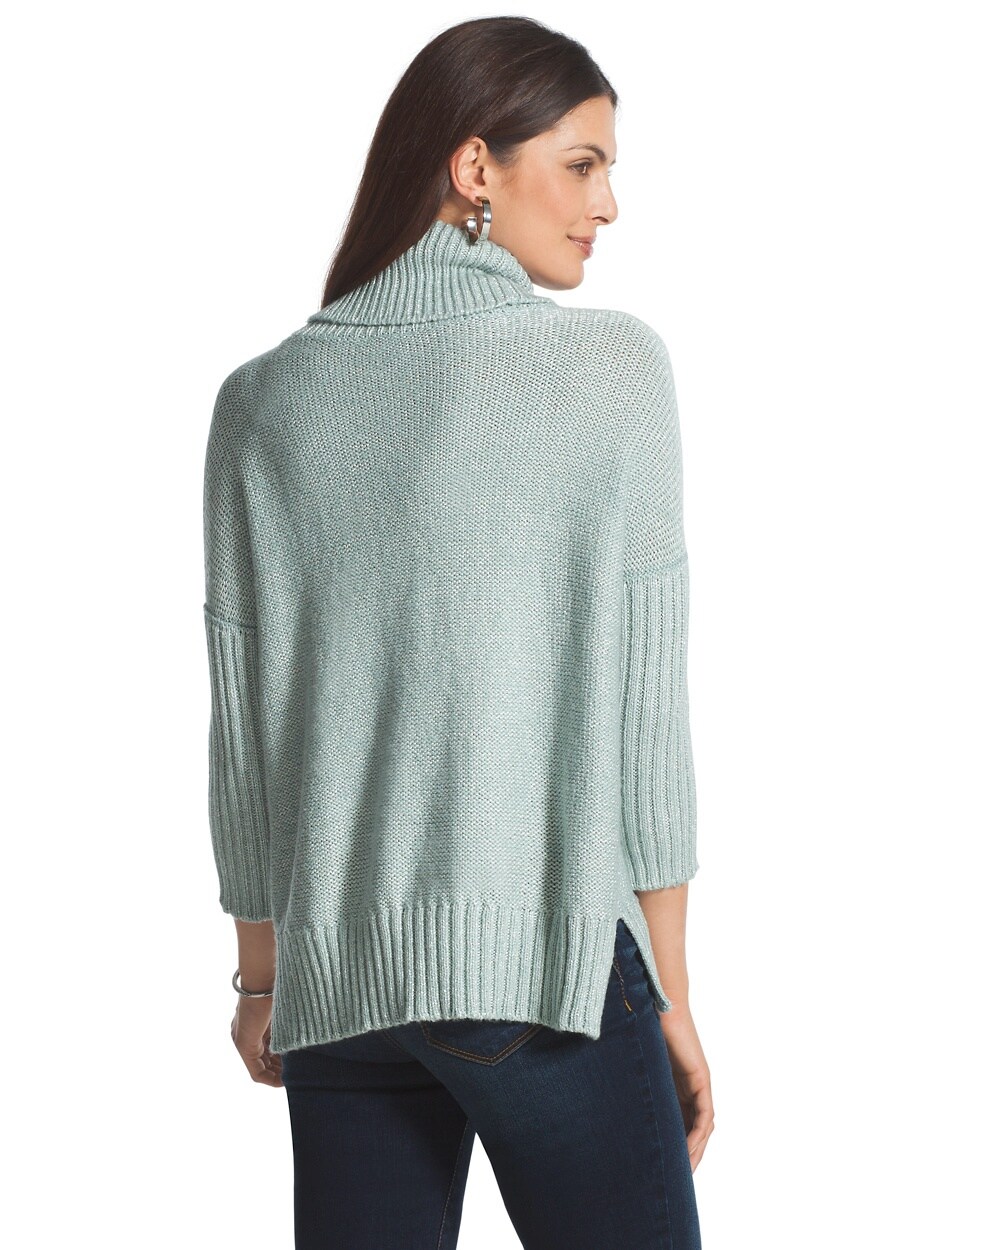 Celine Cowl Neck Sweater - Chico's